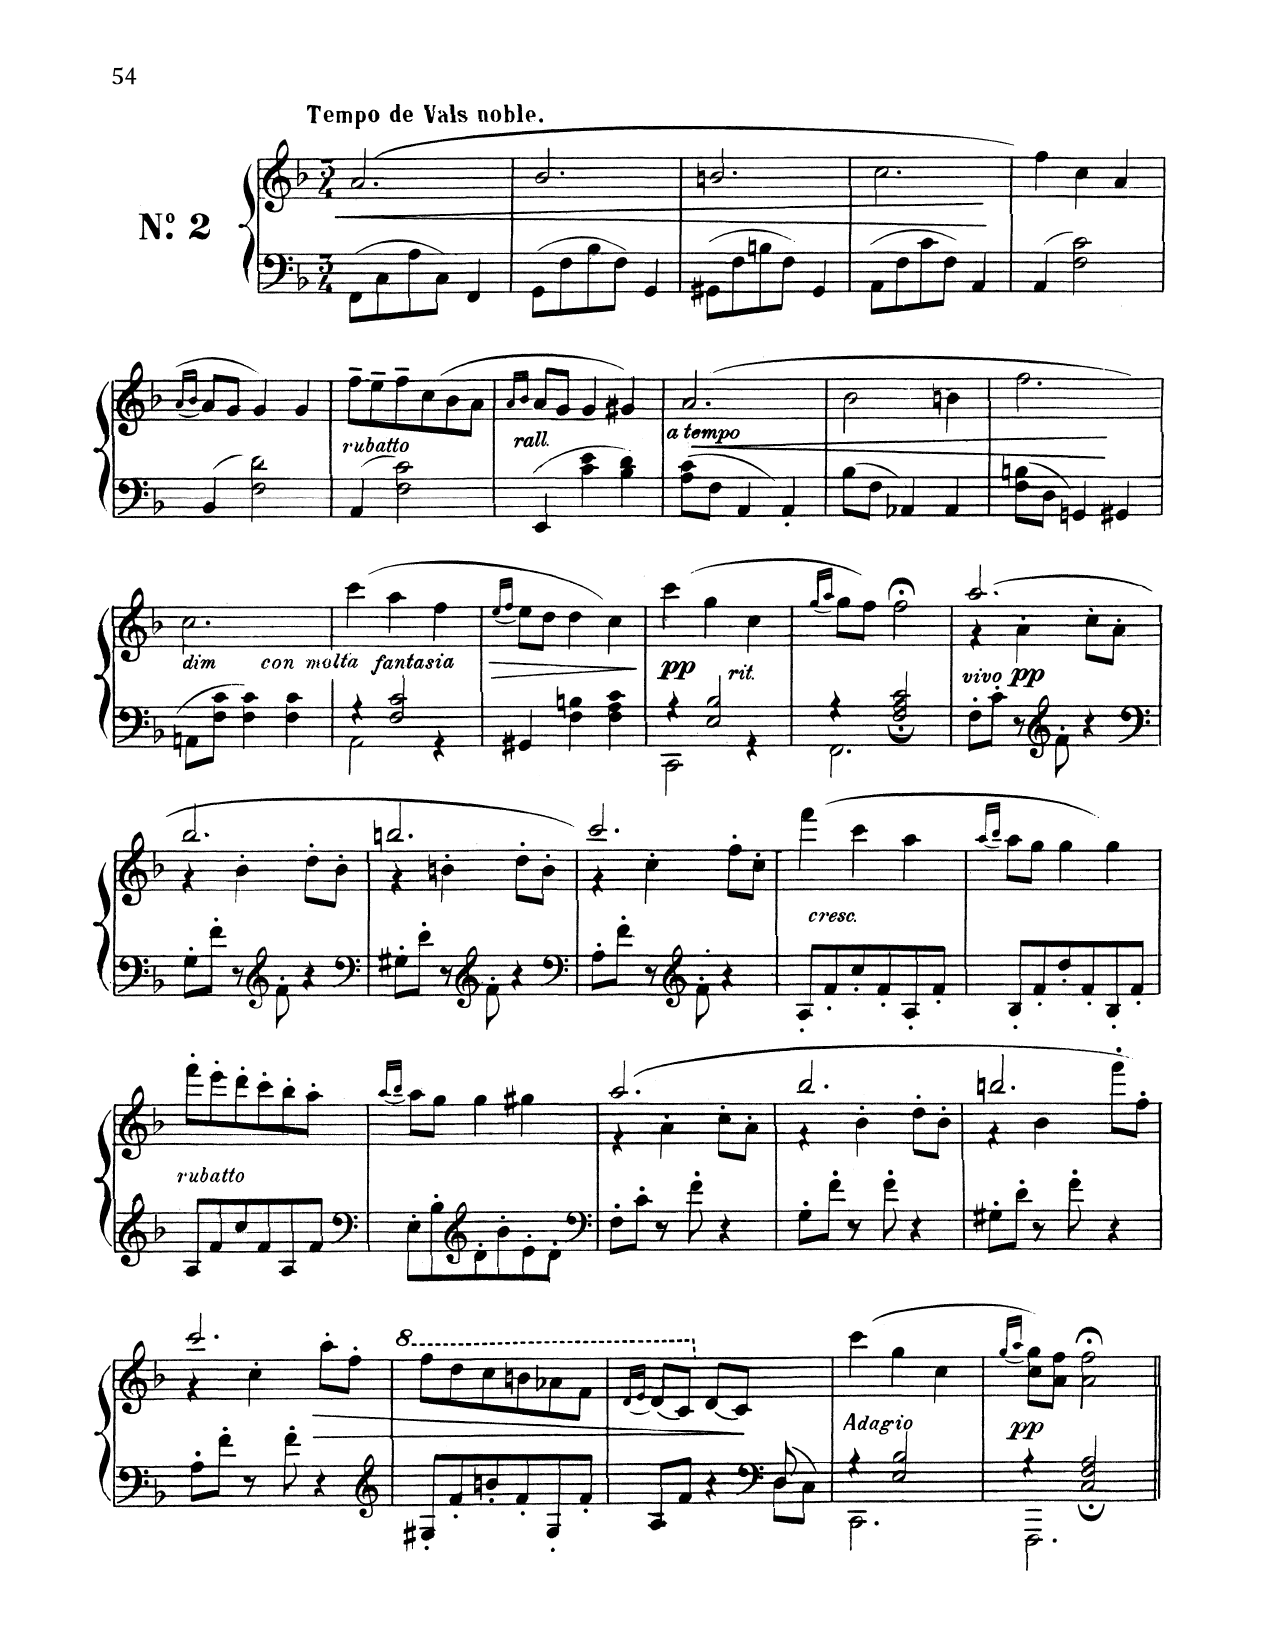 Enrique Granados Tempo De Vals Noble Sheet Music Notes & Chords for Piano - Download or Print PDF